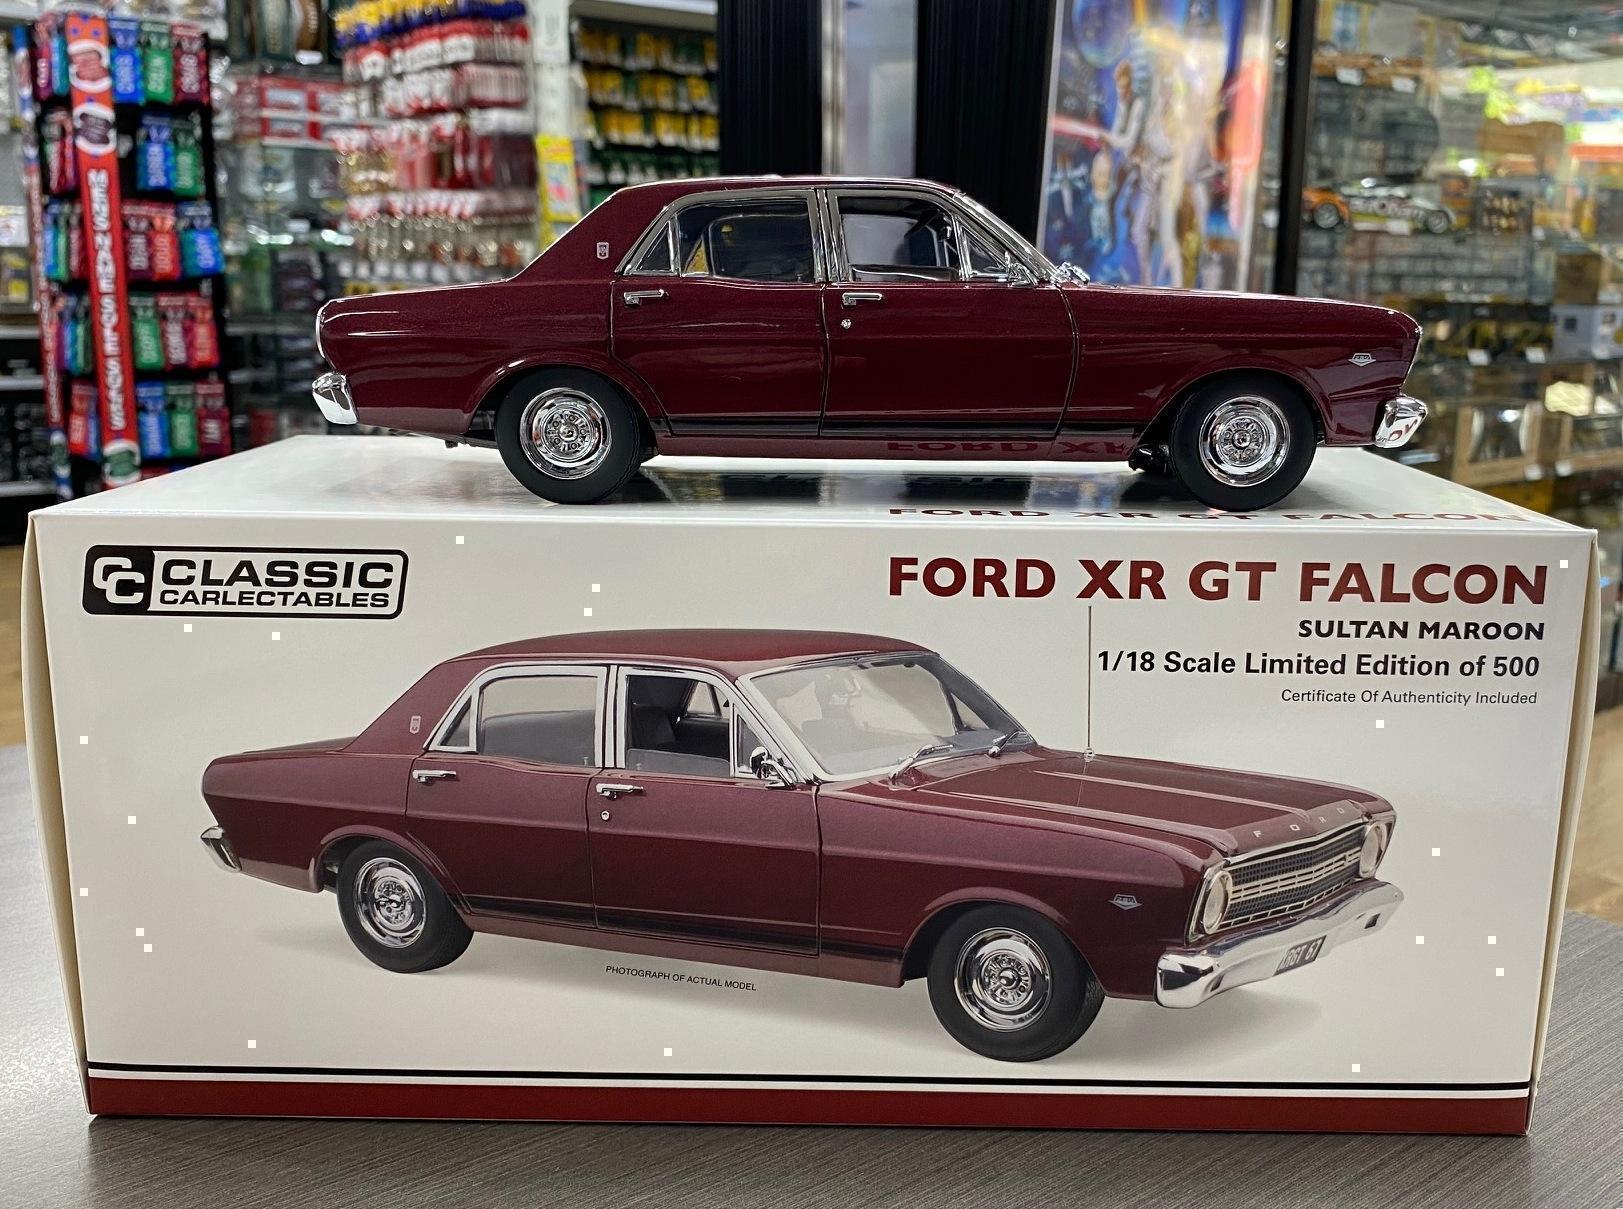 Ford XR GT Falcon Sultan Maroon 1:18 Scale Die Cast Model Car